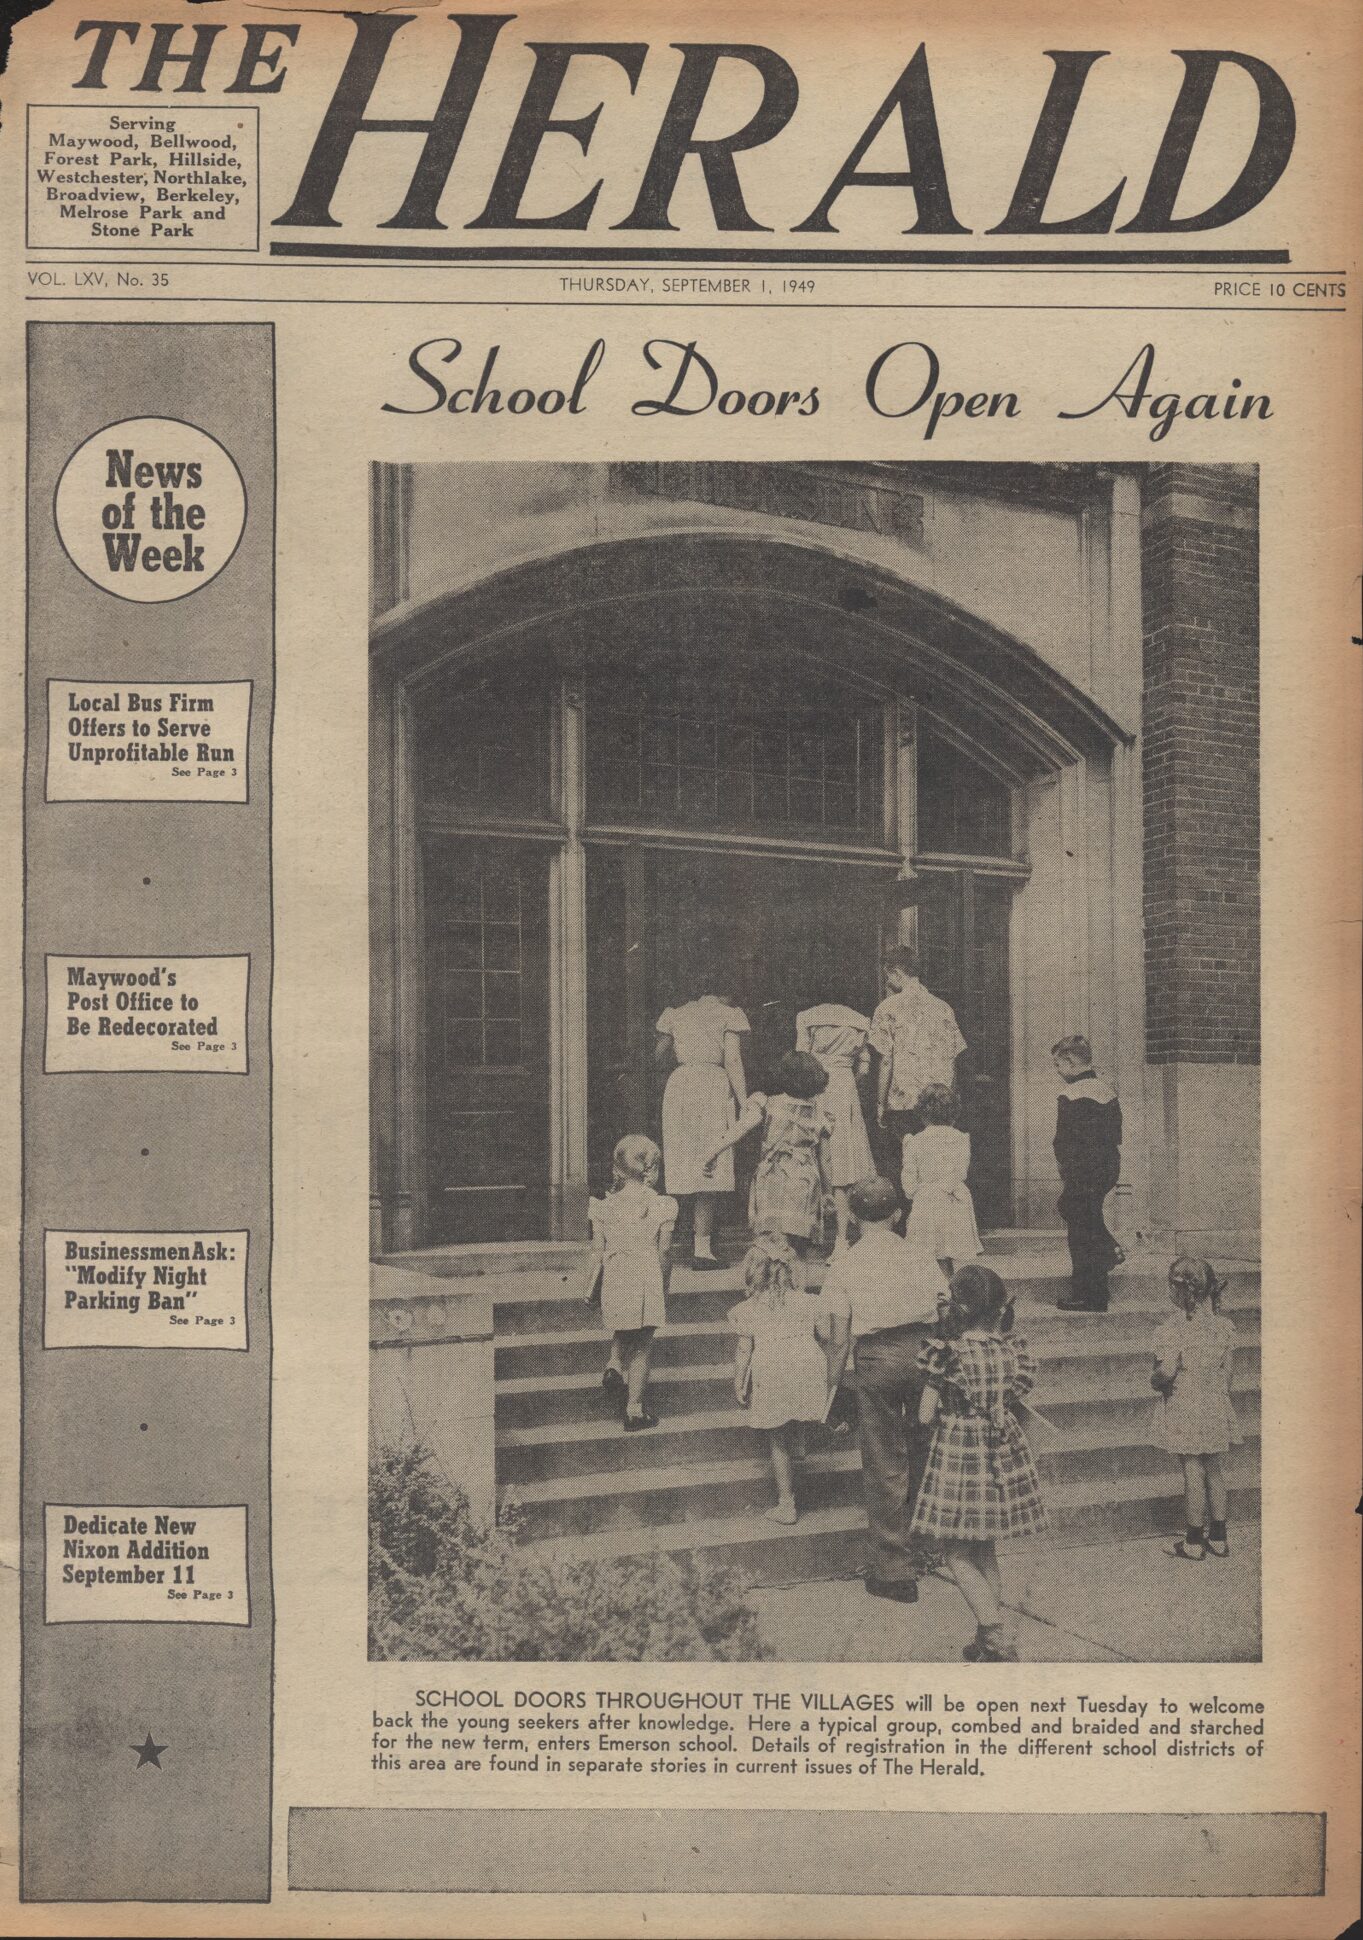 The Herald – 19490901